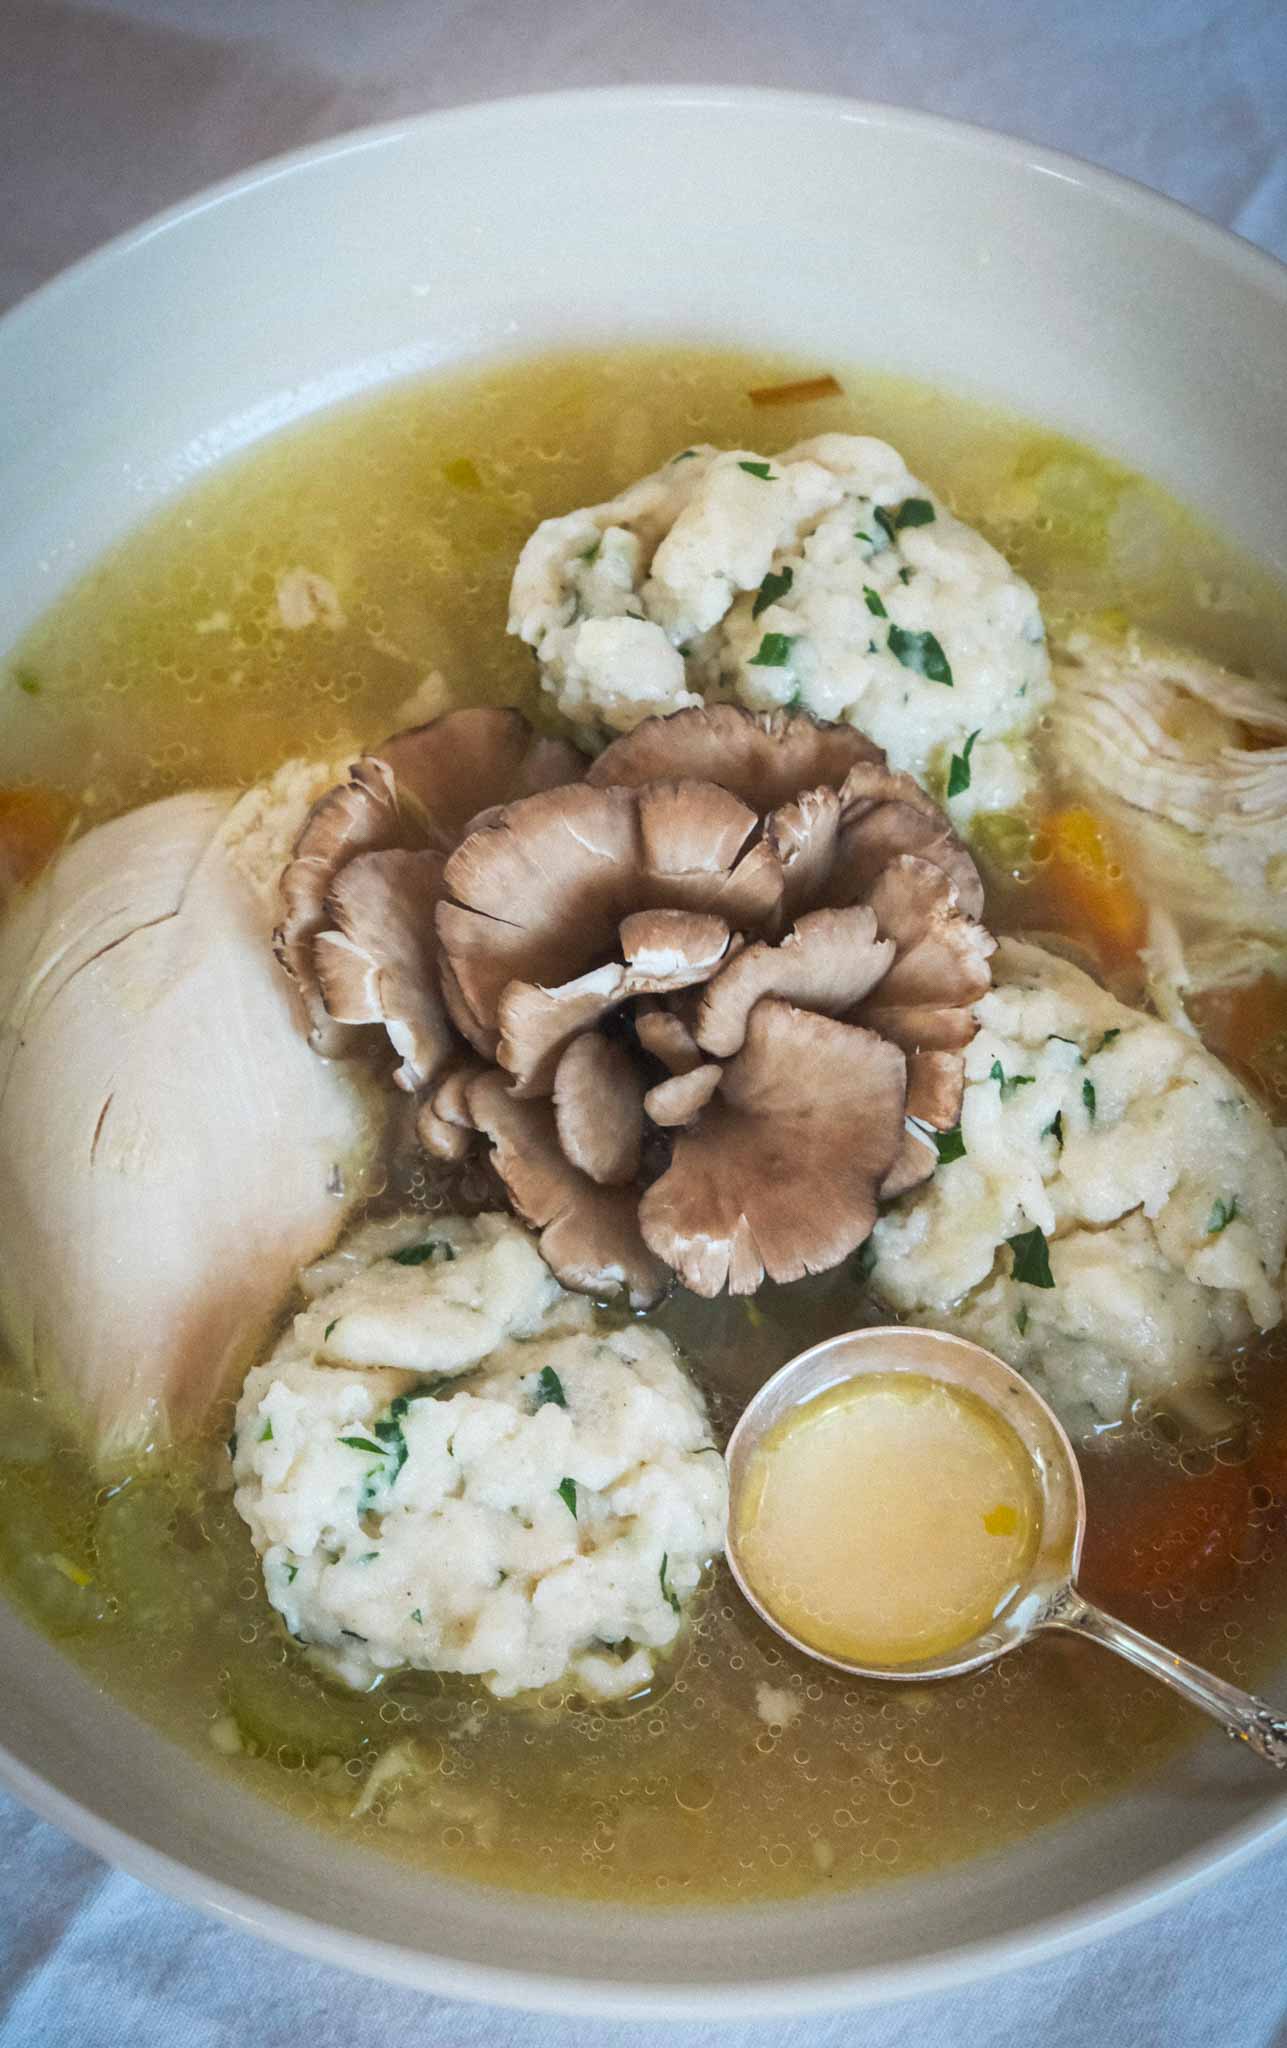 chicken and dumplings recipe